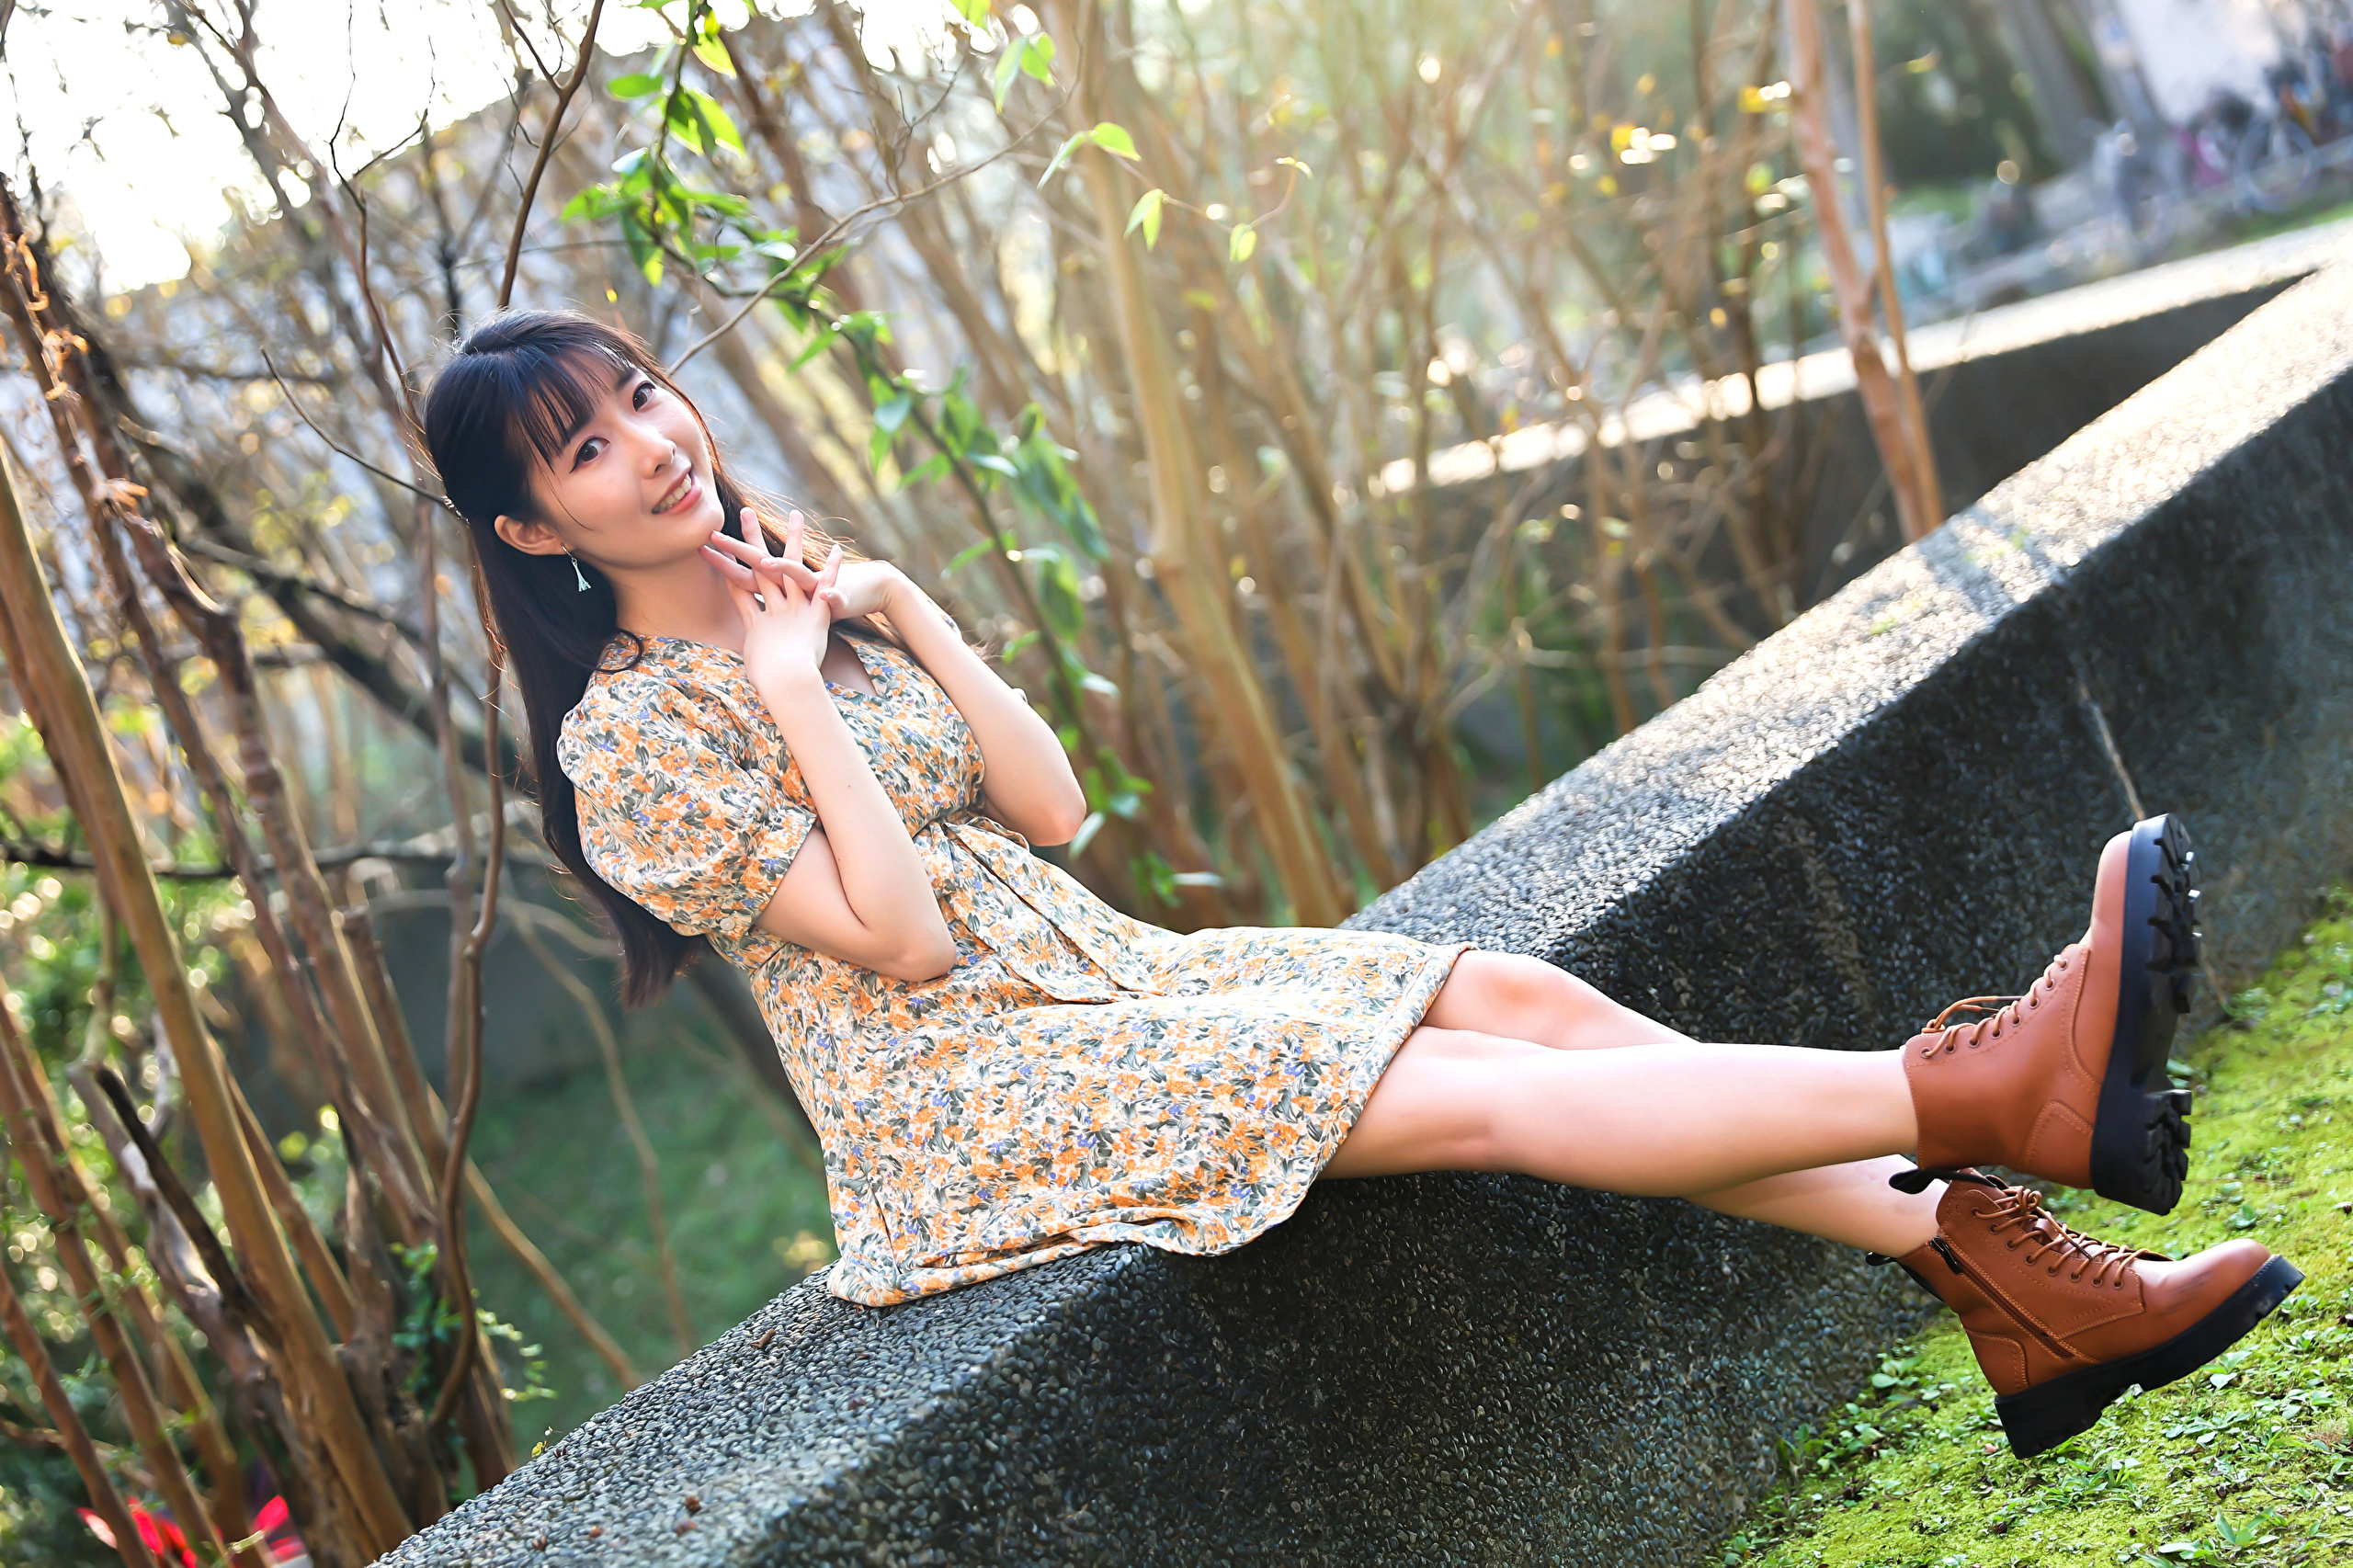 Asian Model Women Long Hair Dark Hair Sitting Ankle Boots 2560x1706